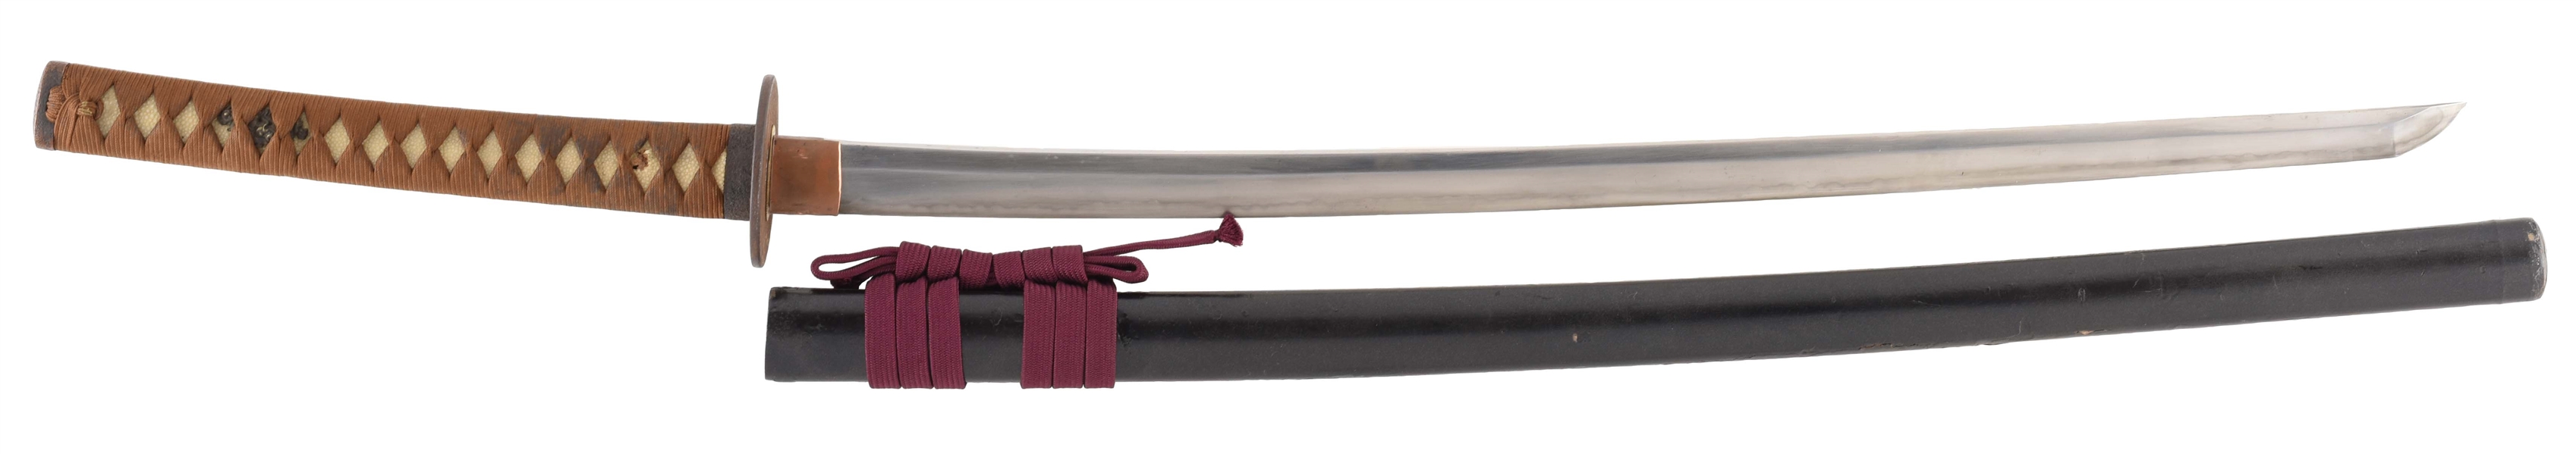 UNUSUALLY LONG JAPANESE WWII SAMURAI SWORD ERA BY KANEMICHI.